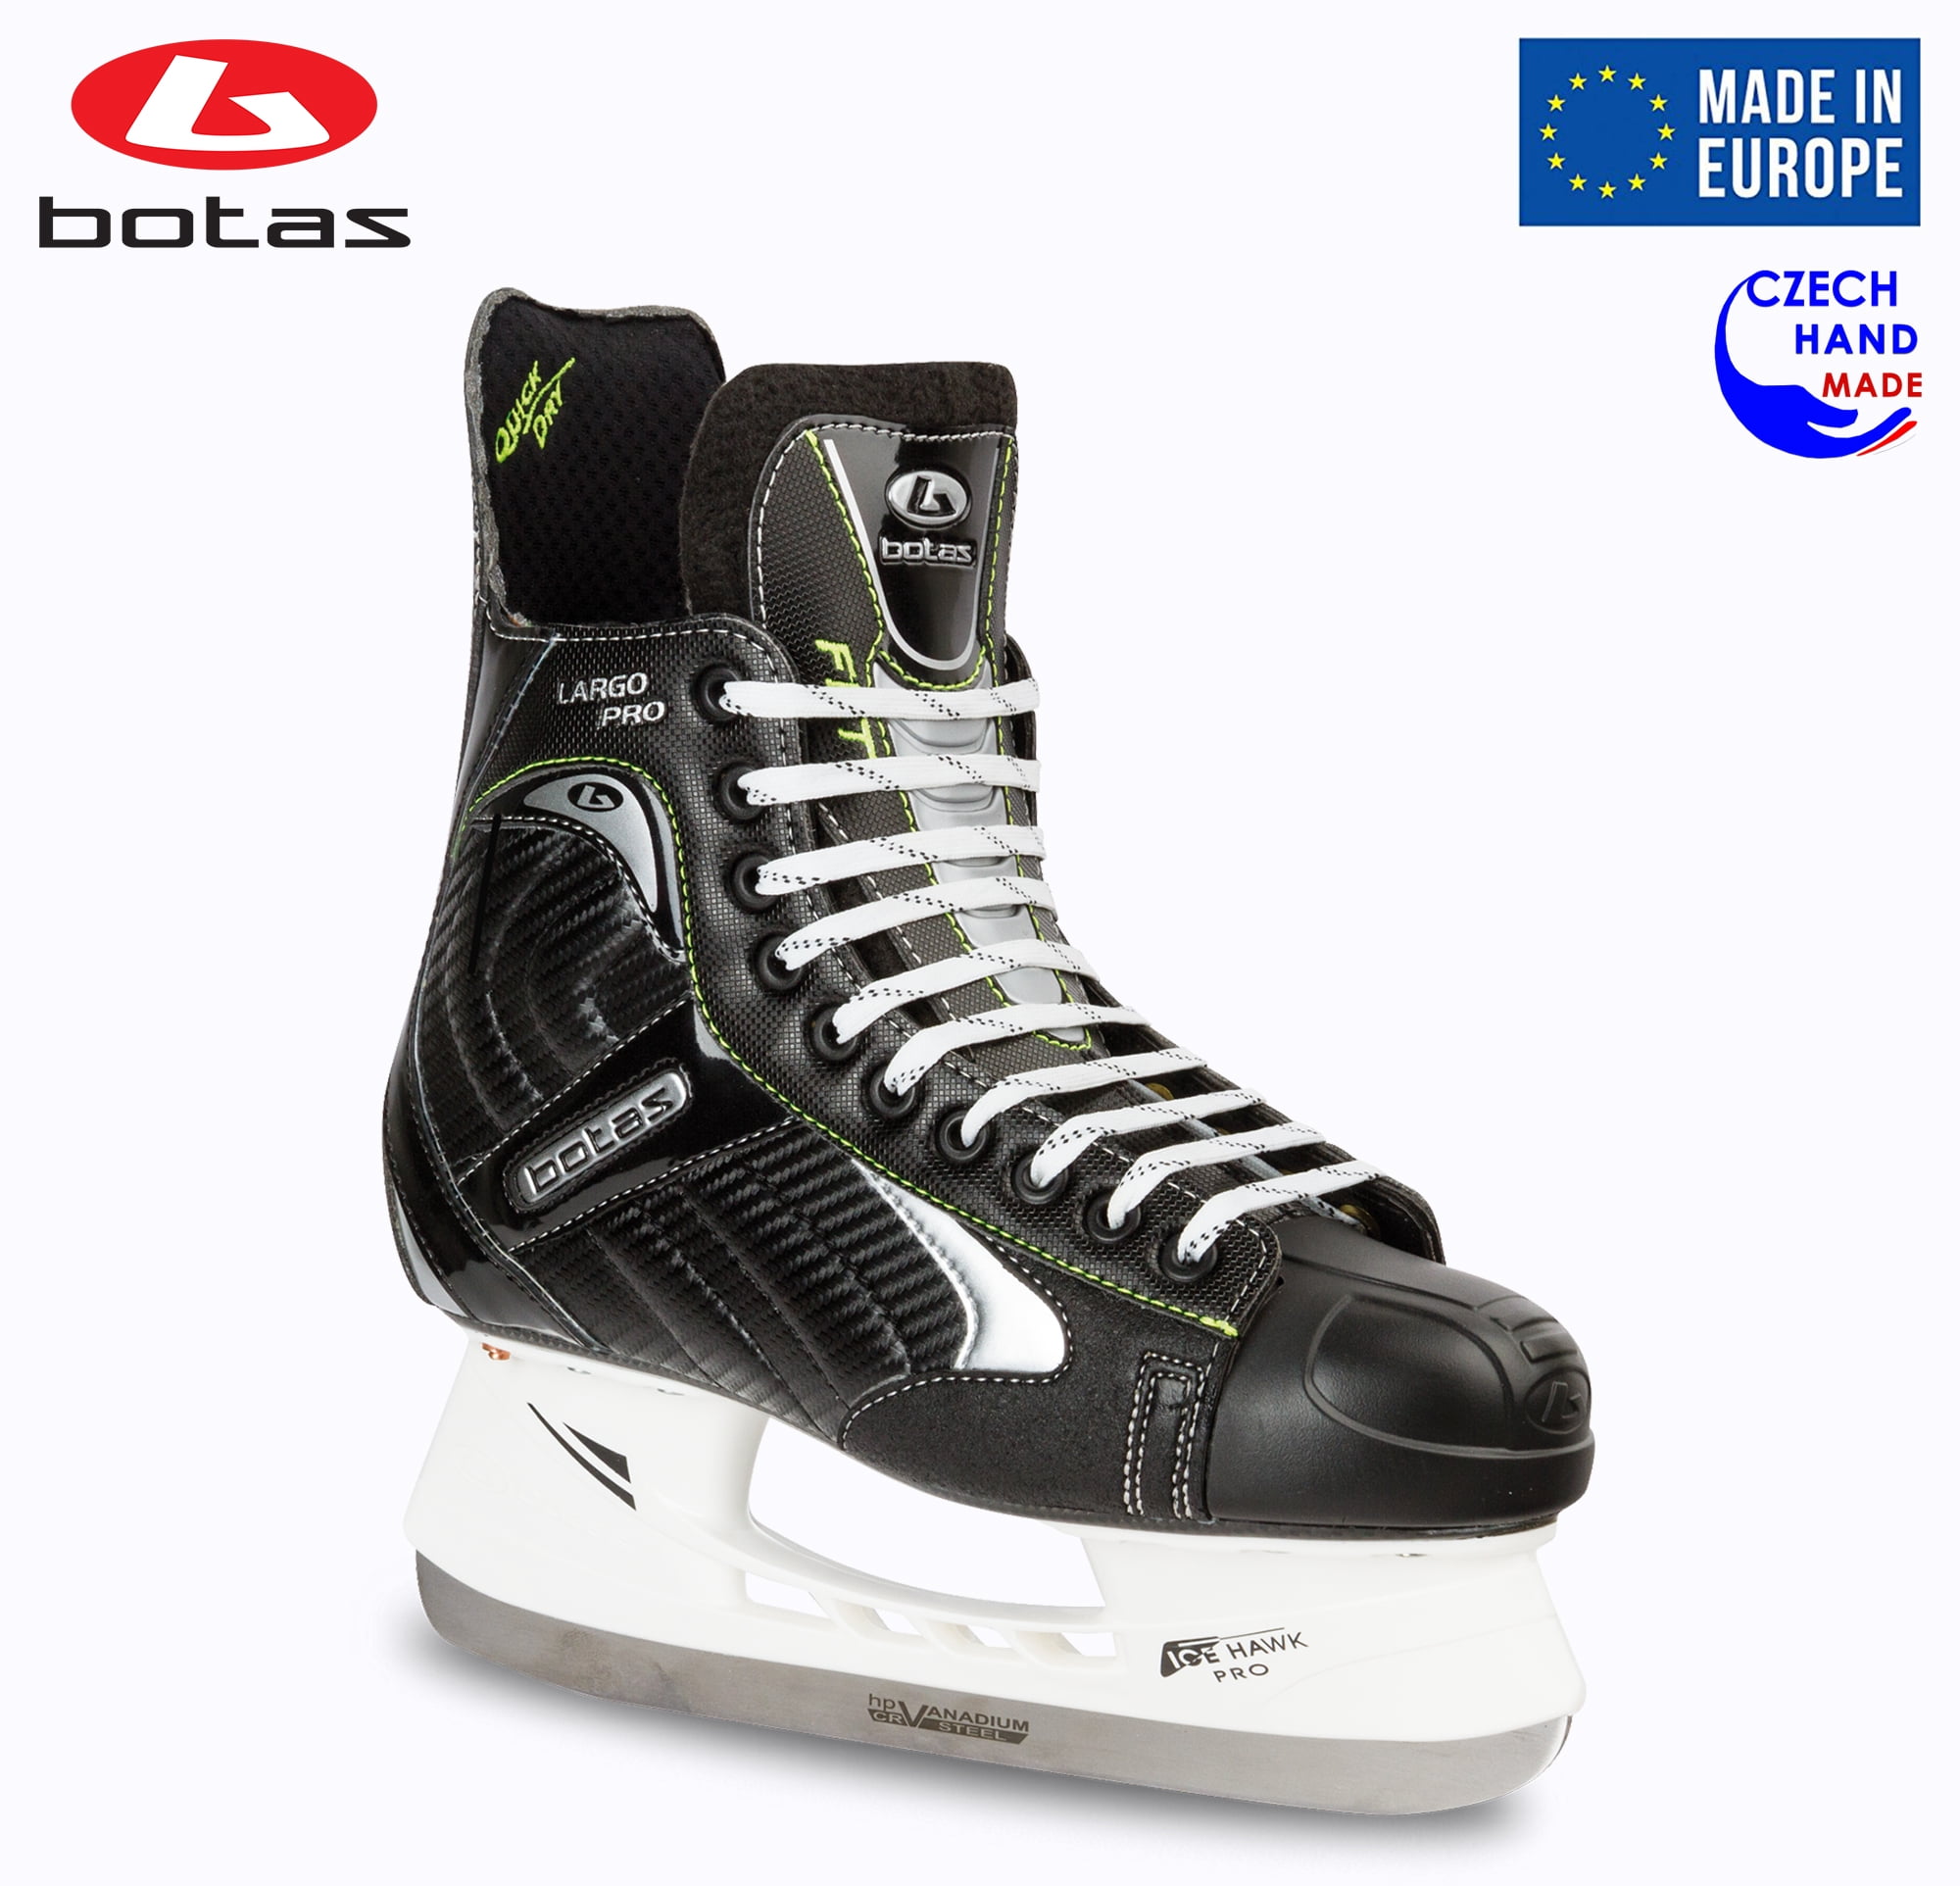 BOTAS - LARGO 571 PRO - Mens Ice Hockey Skates Made in Europe (Czech Republic) Color Black, Size Adult 7